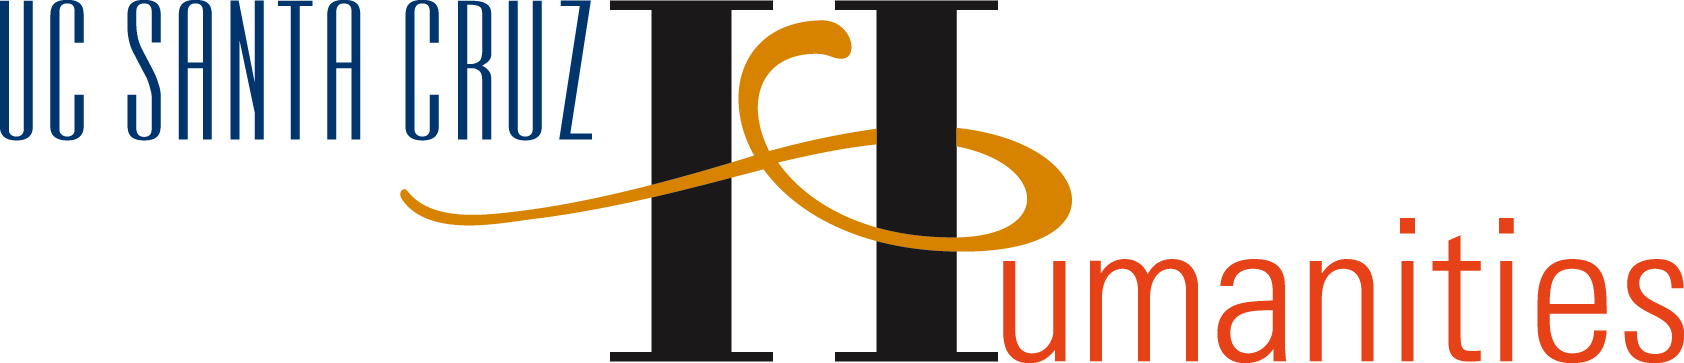 Humanities Division Logo